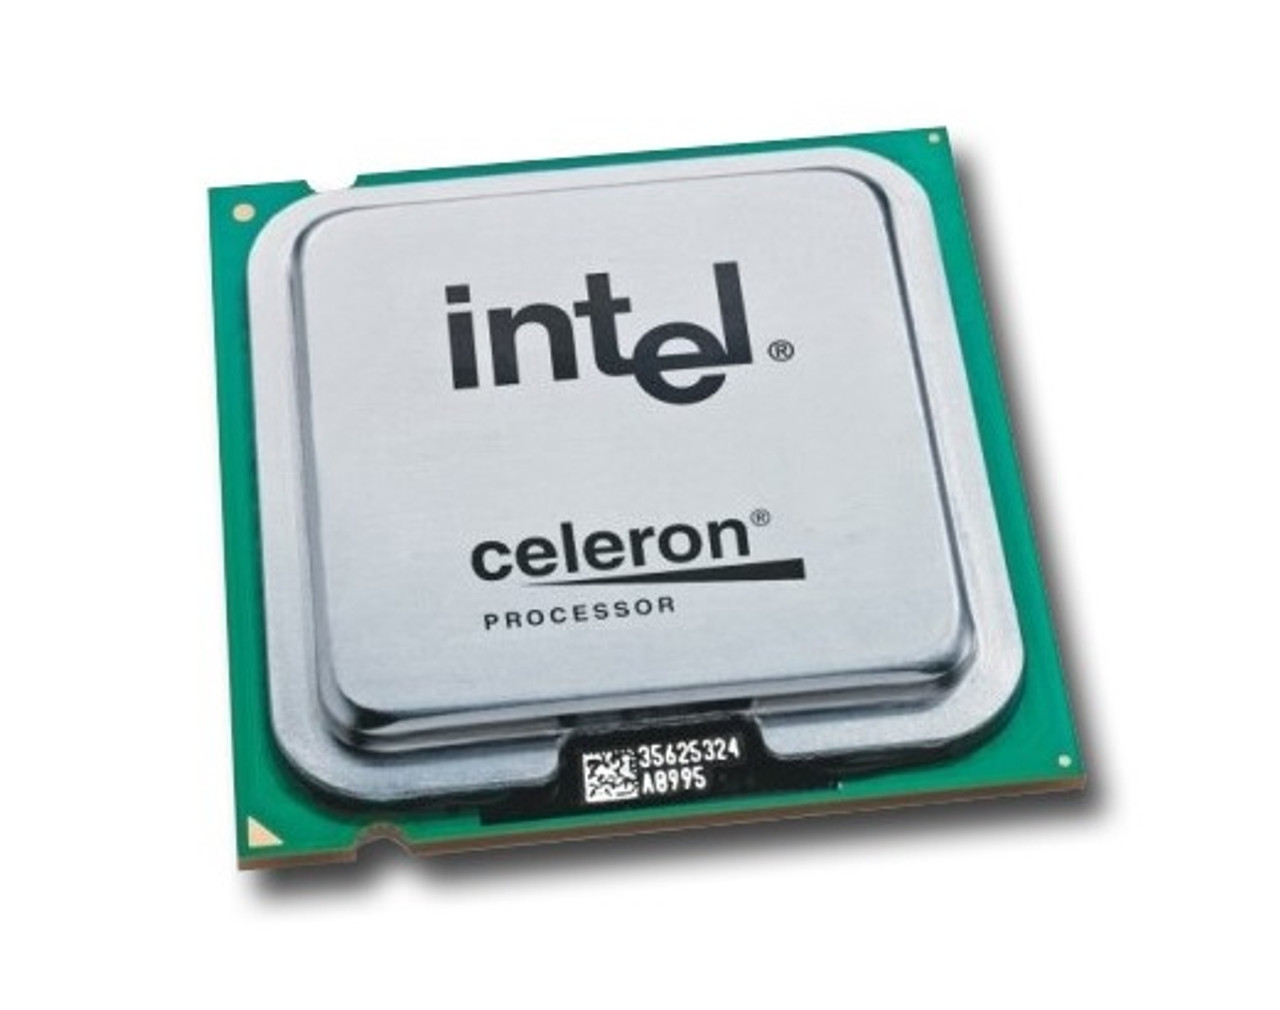 SL7TG - Intel Celeron D 325 2.53GHz 533MHz FSB 256KB L2 Cache Socket PPGA478 Processor